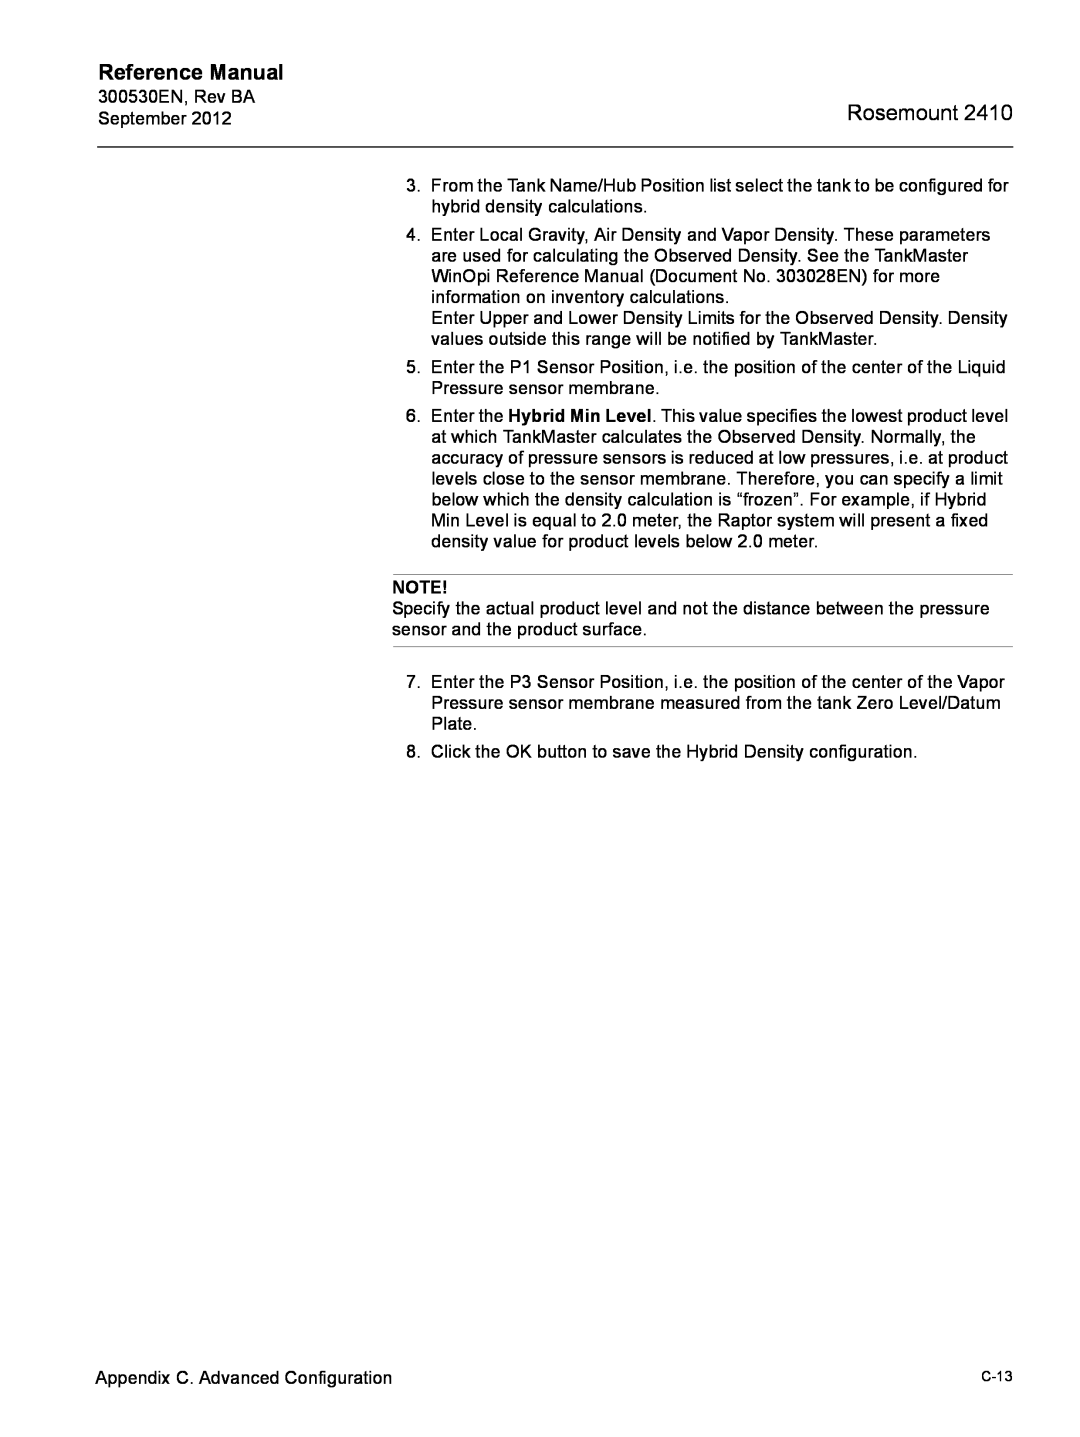 Emerson Process Management Rosemount 2410 manual Reference Manual, C-13 